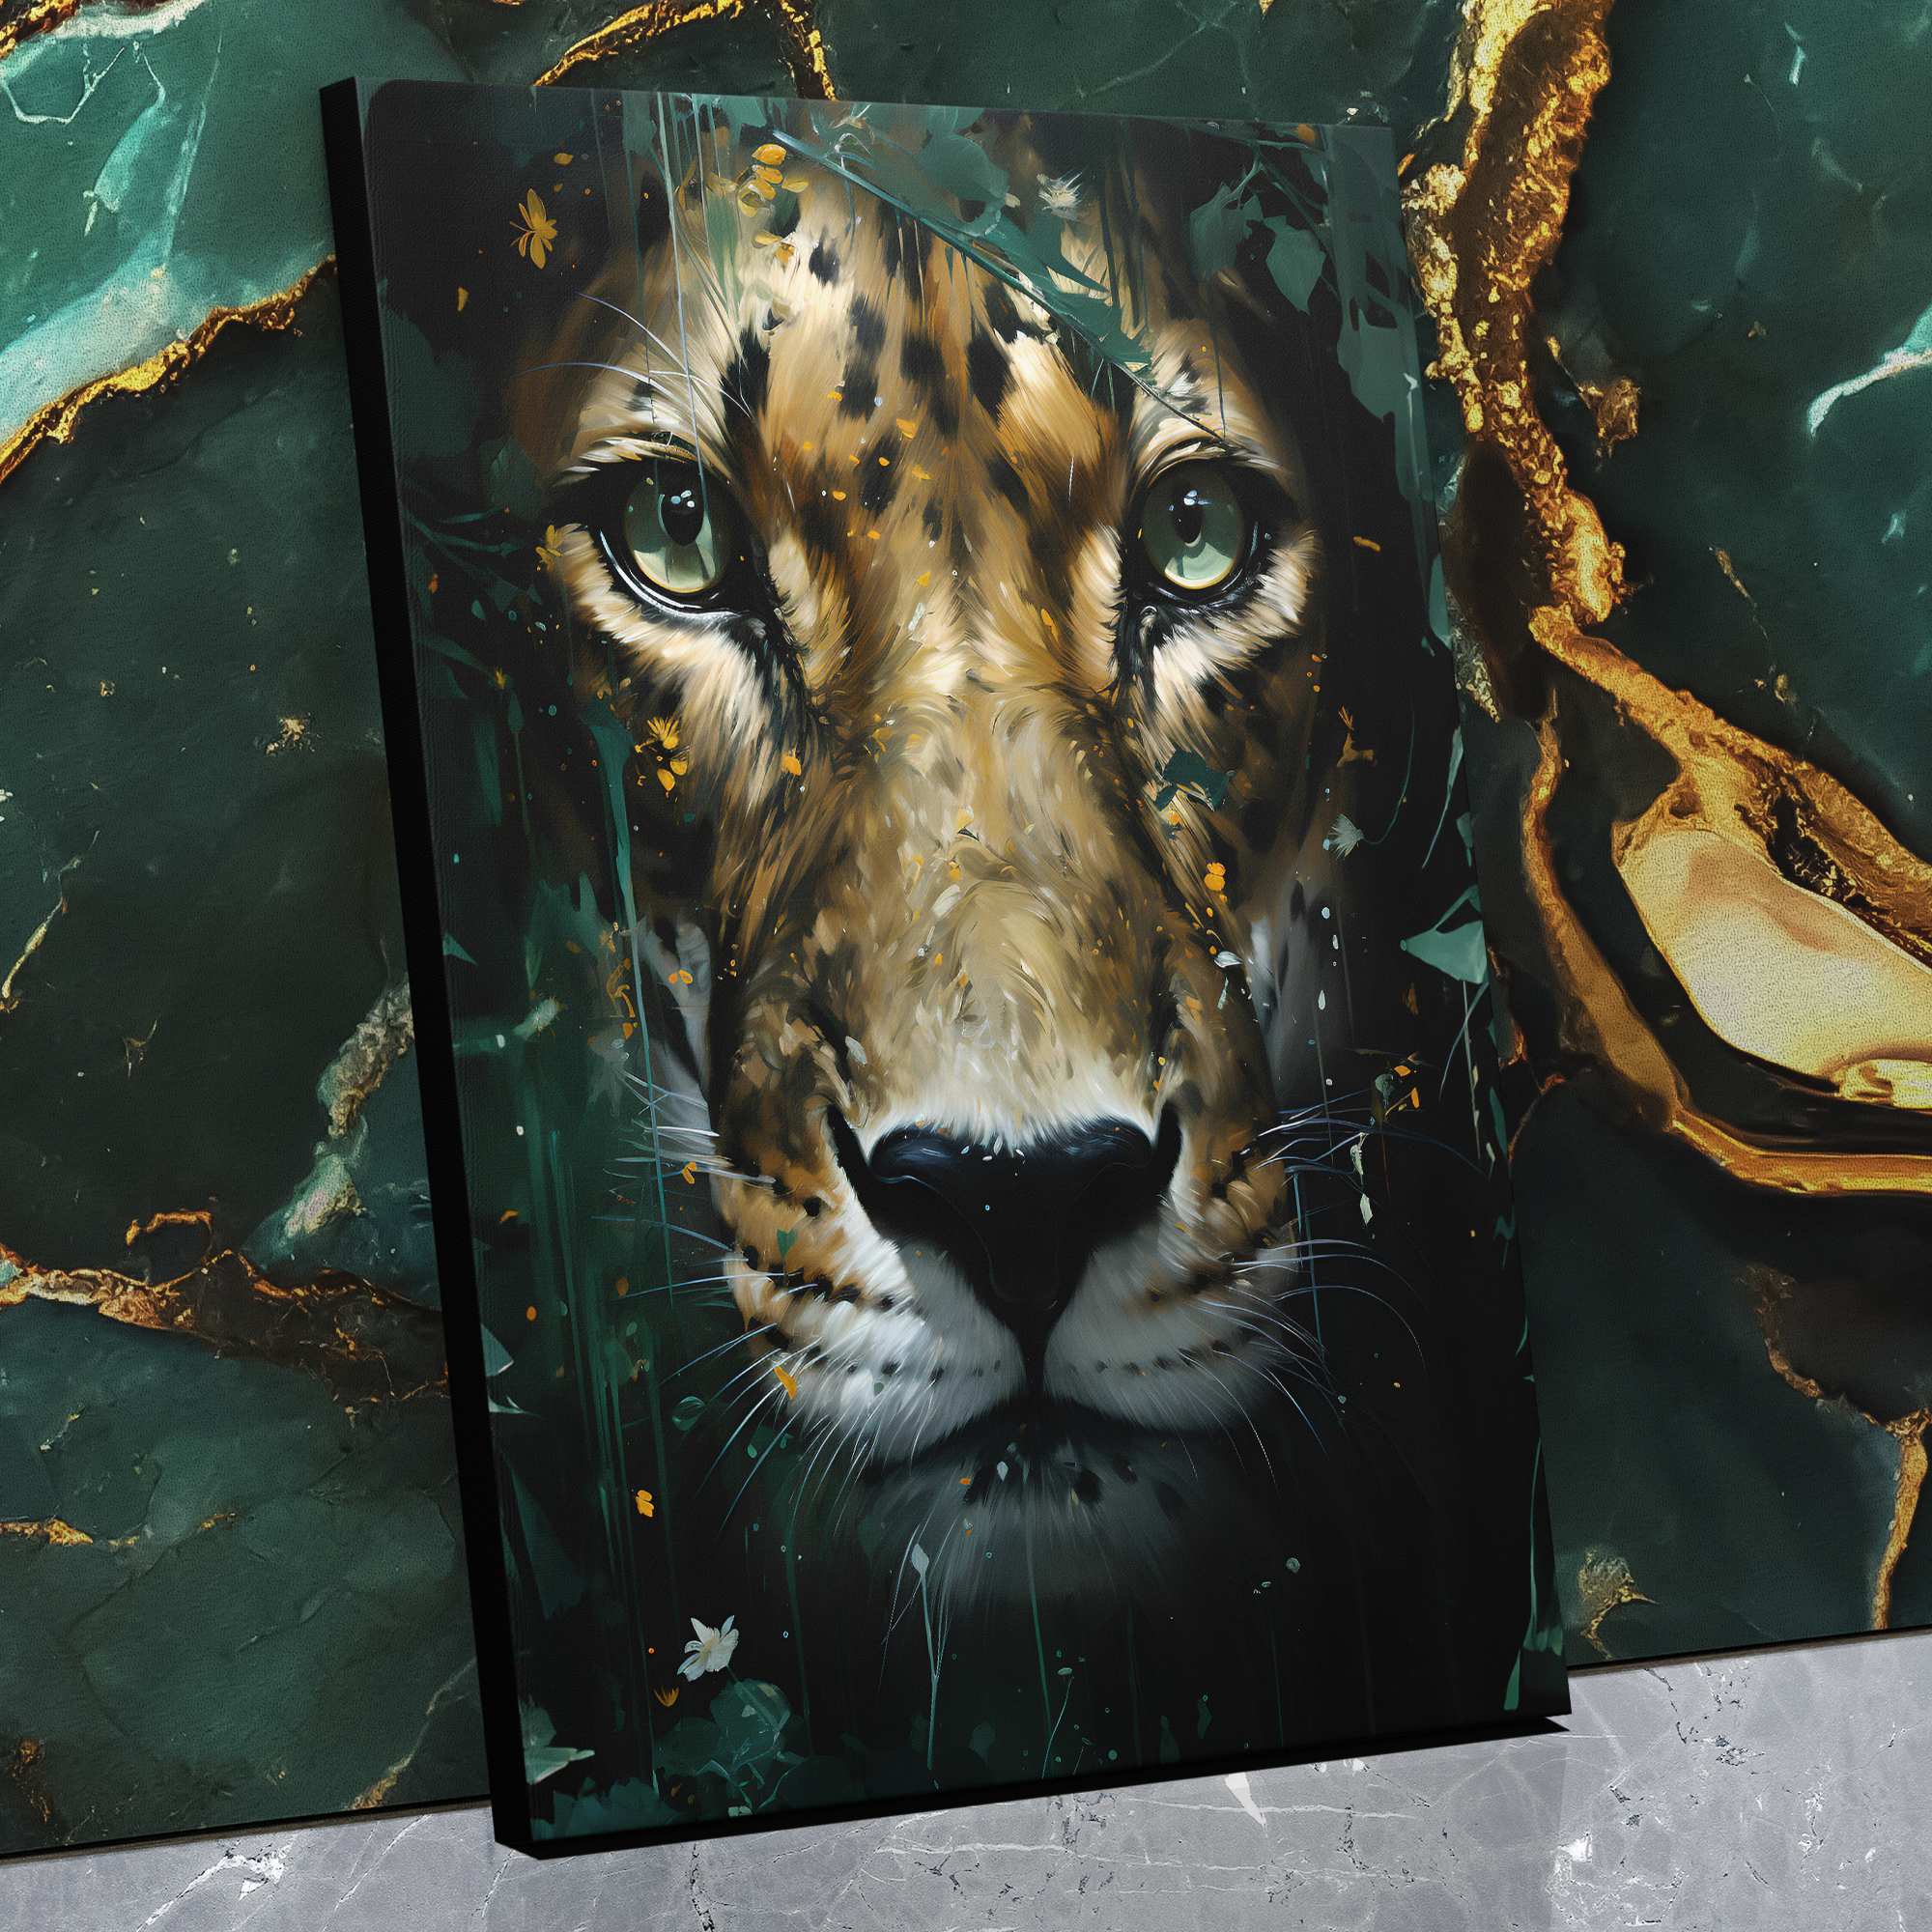 Jade Leopard - Luxury Wall Art - Canvas Print